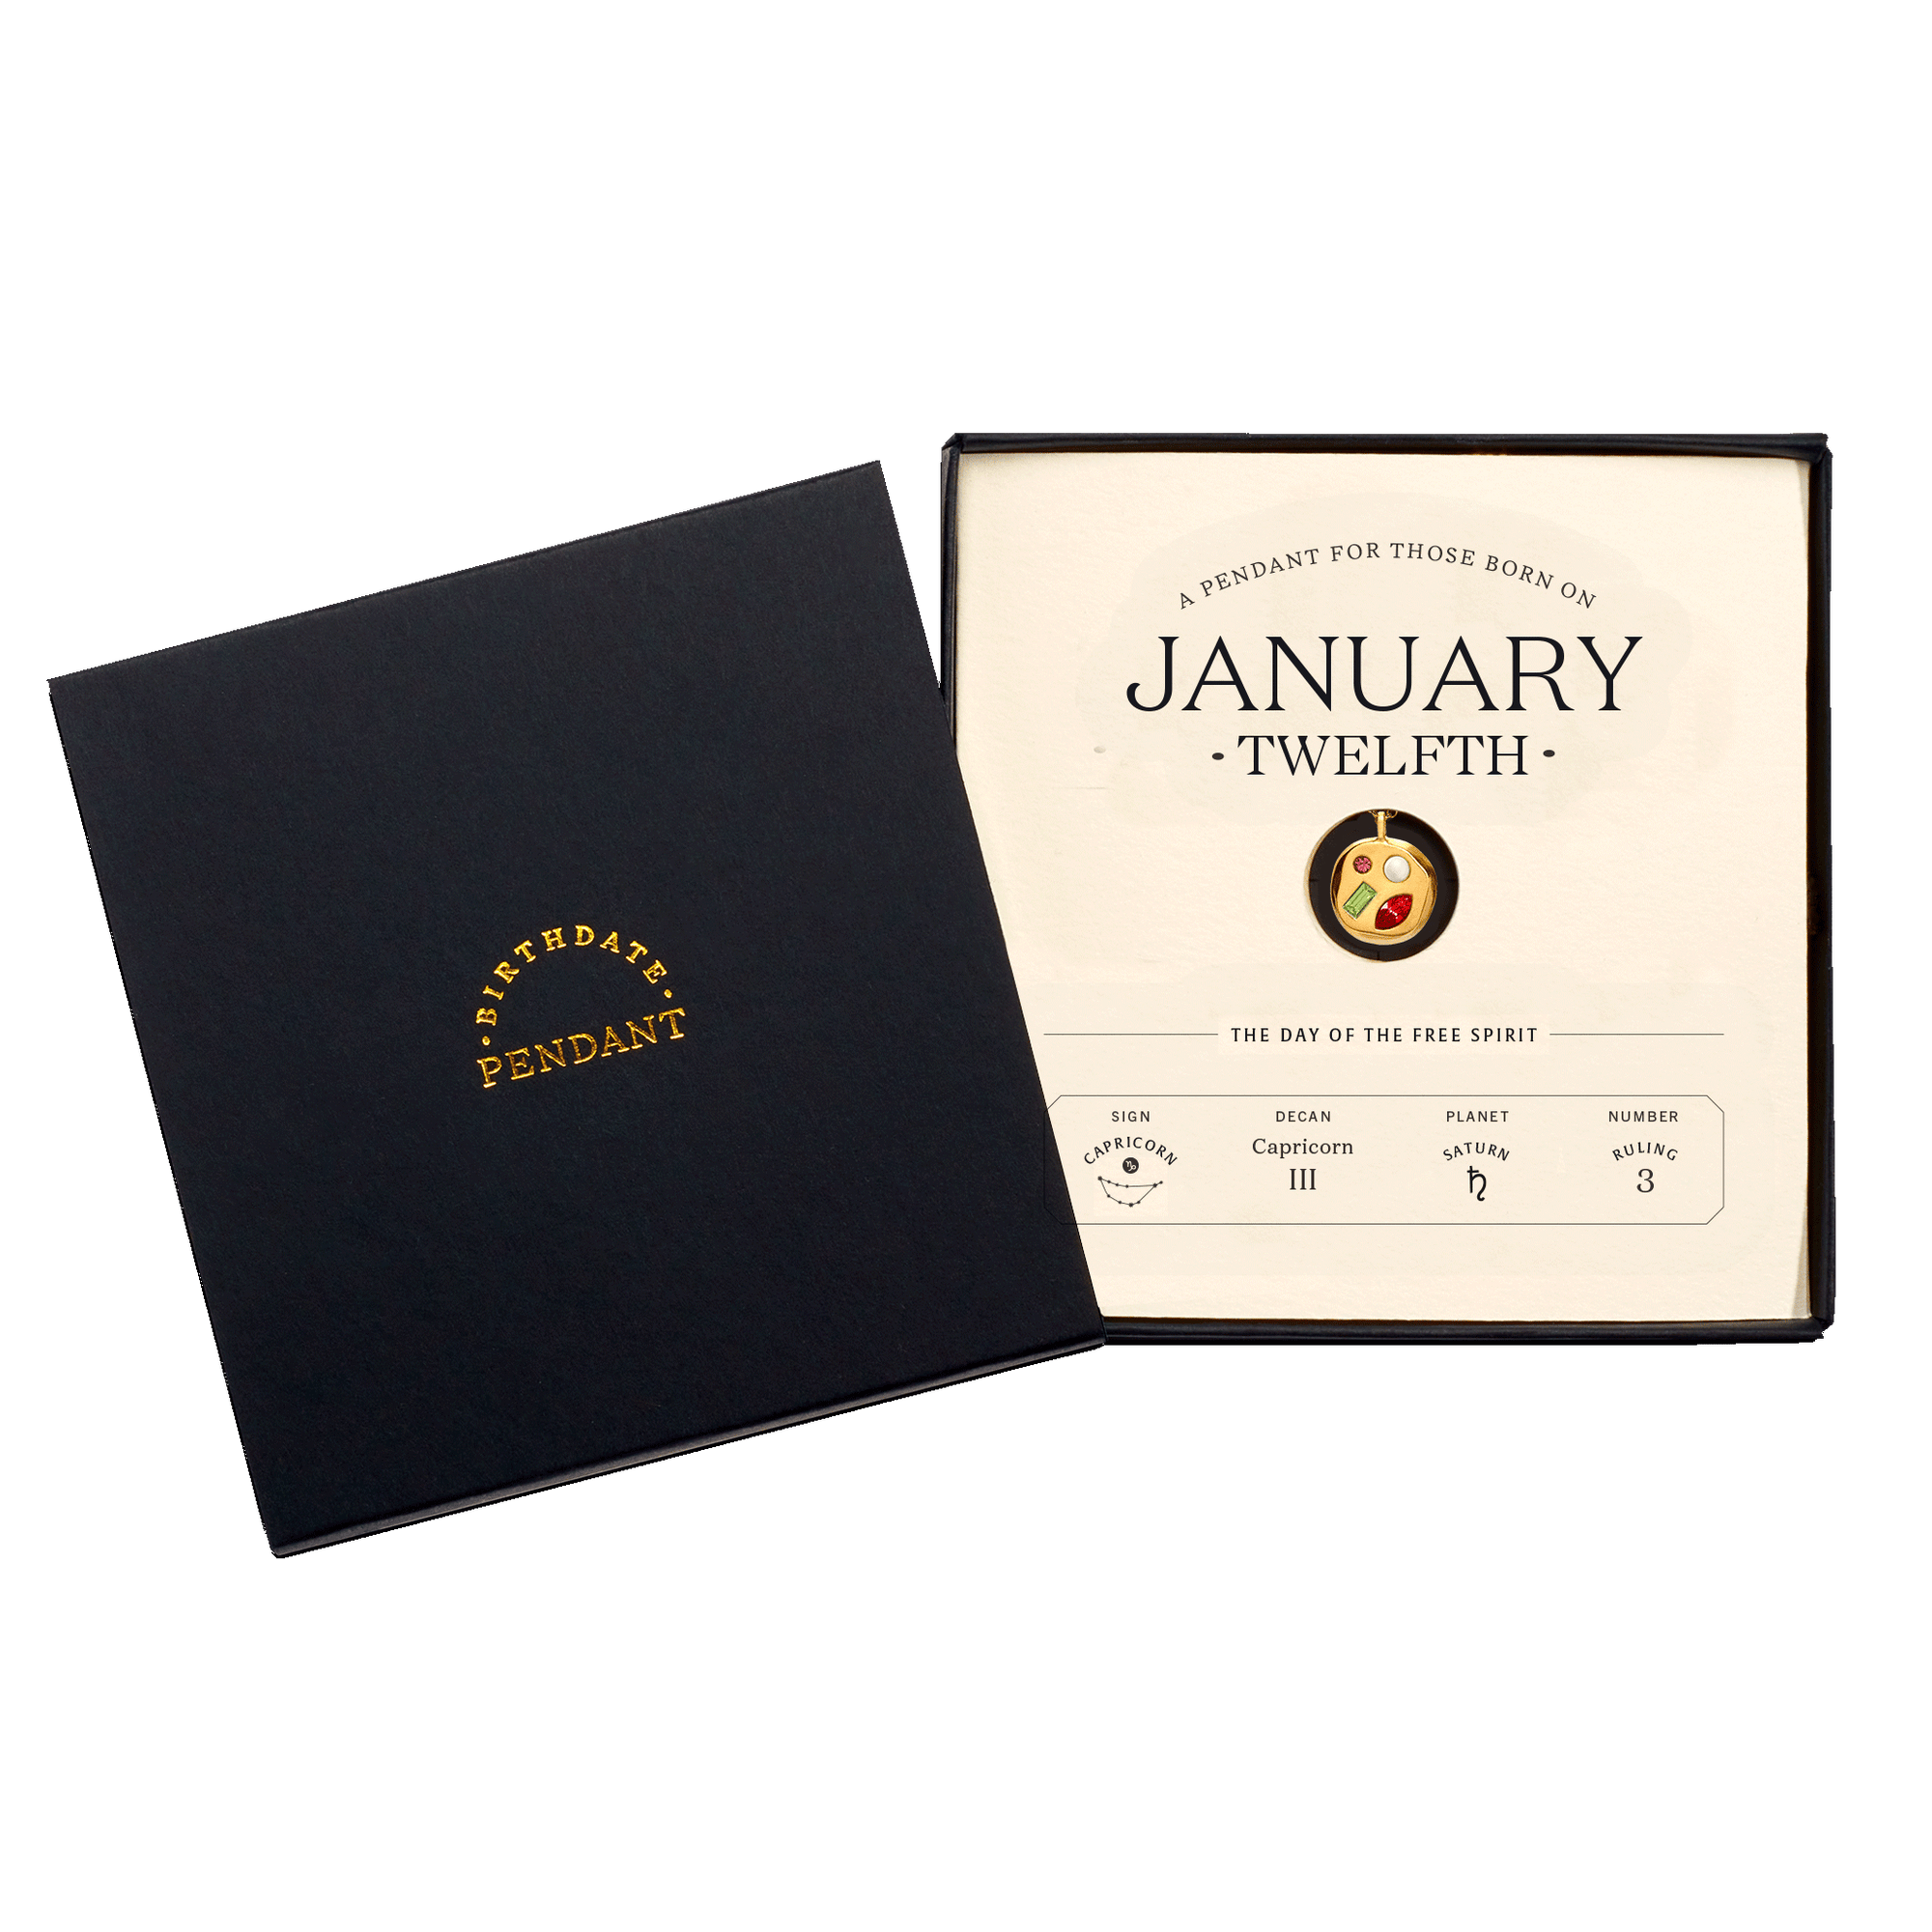 The January Twelfth Pendant inside its box